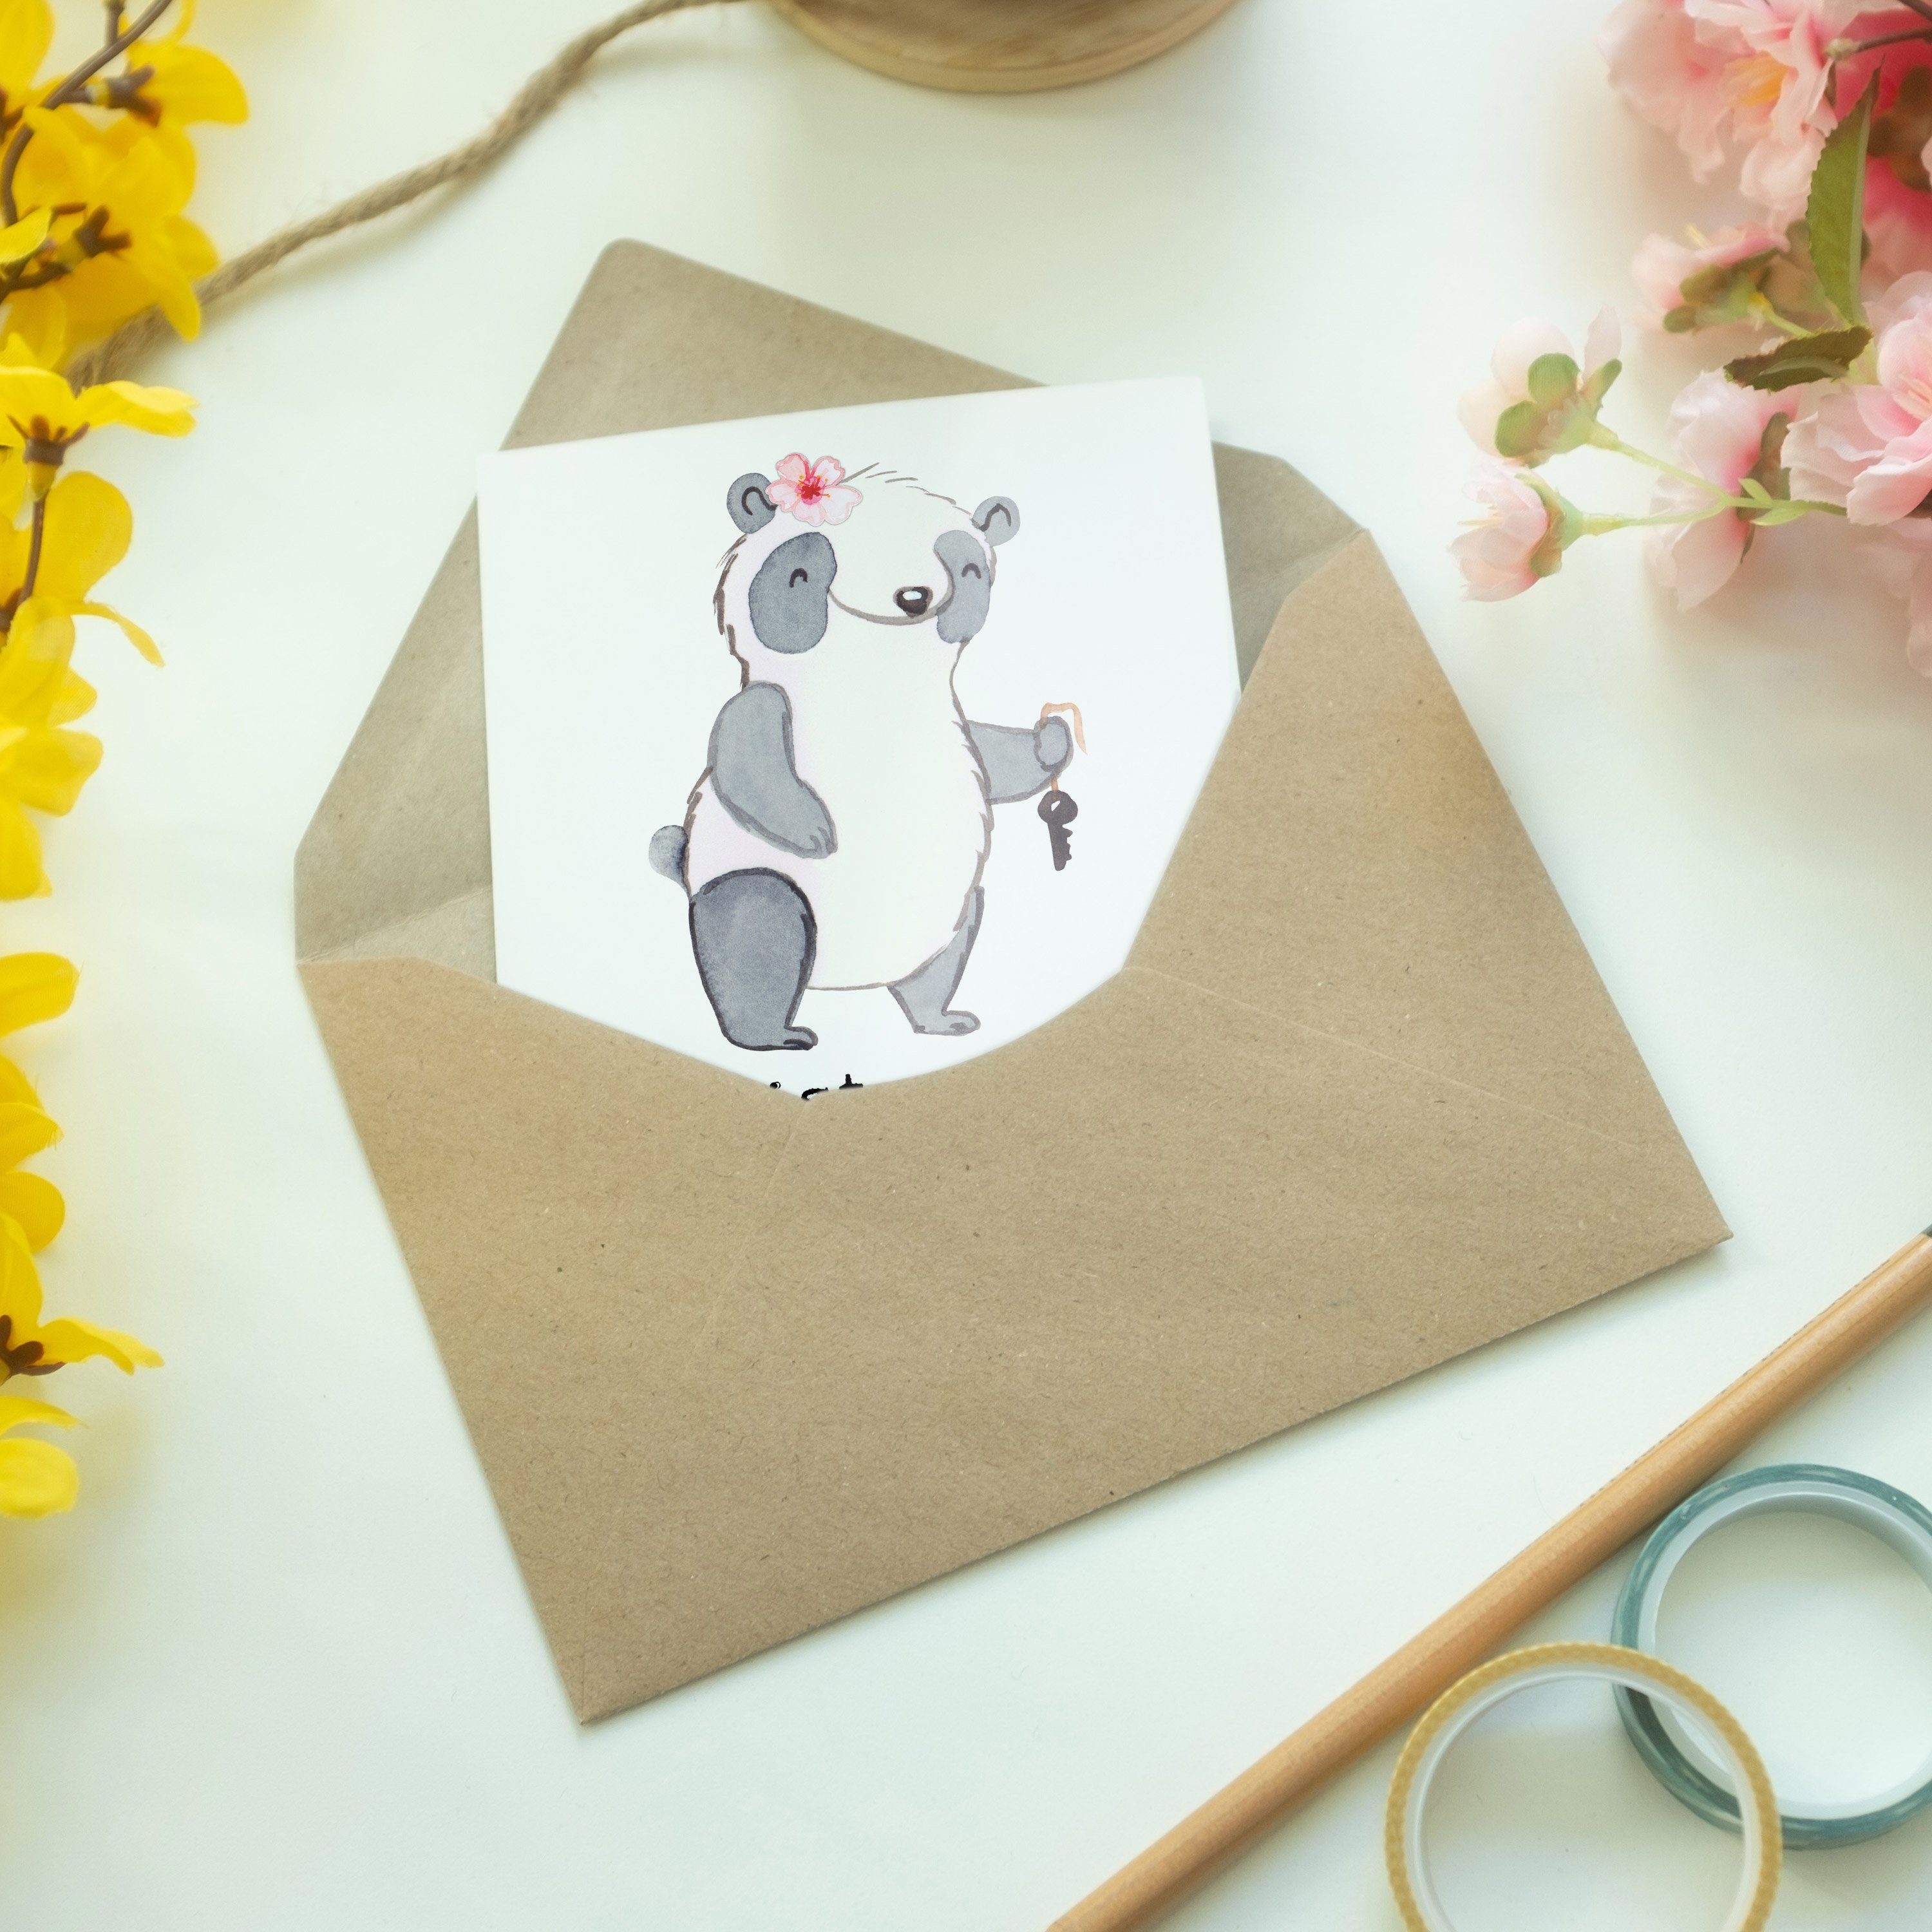 Mr. & Mrs. Panda Grußkarte Danke, Klap Geburtstagskarte, - Herz Vermieterin - Weiß mit Geschenk